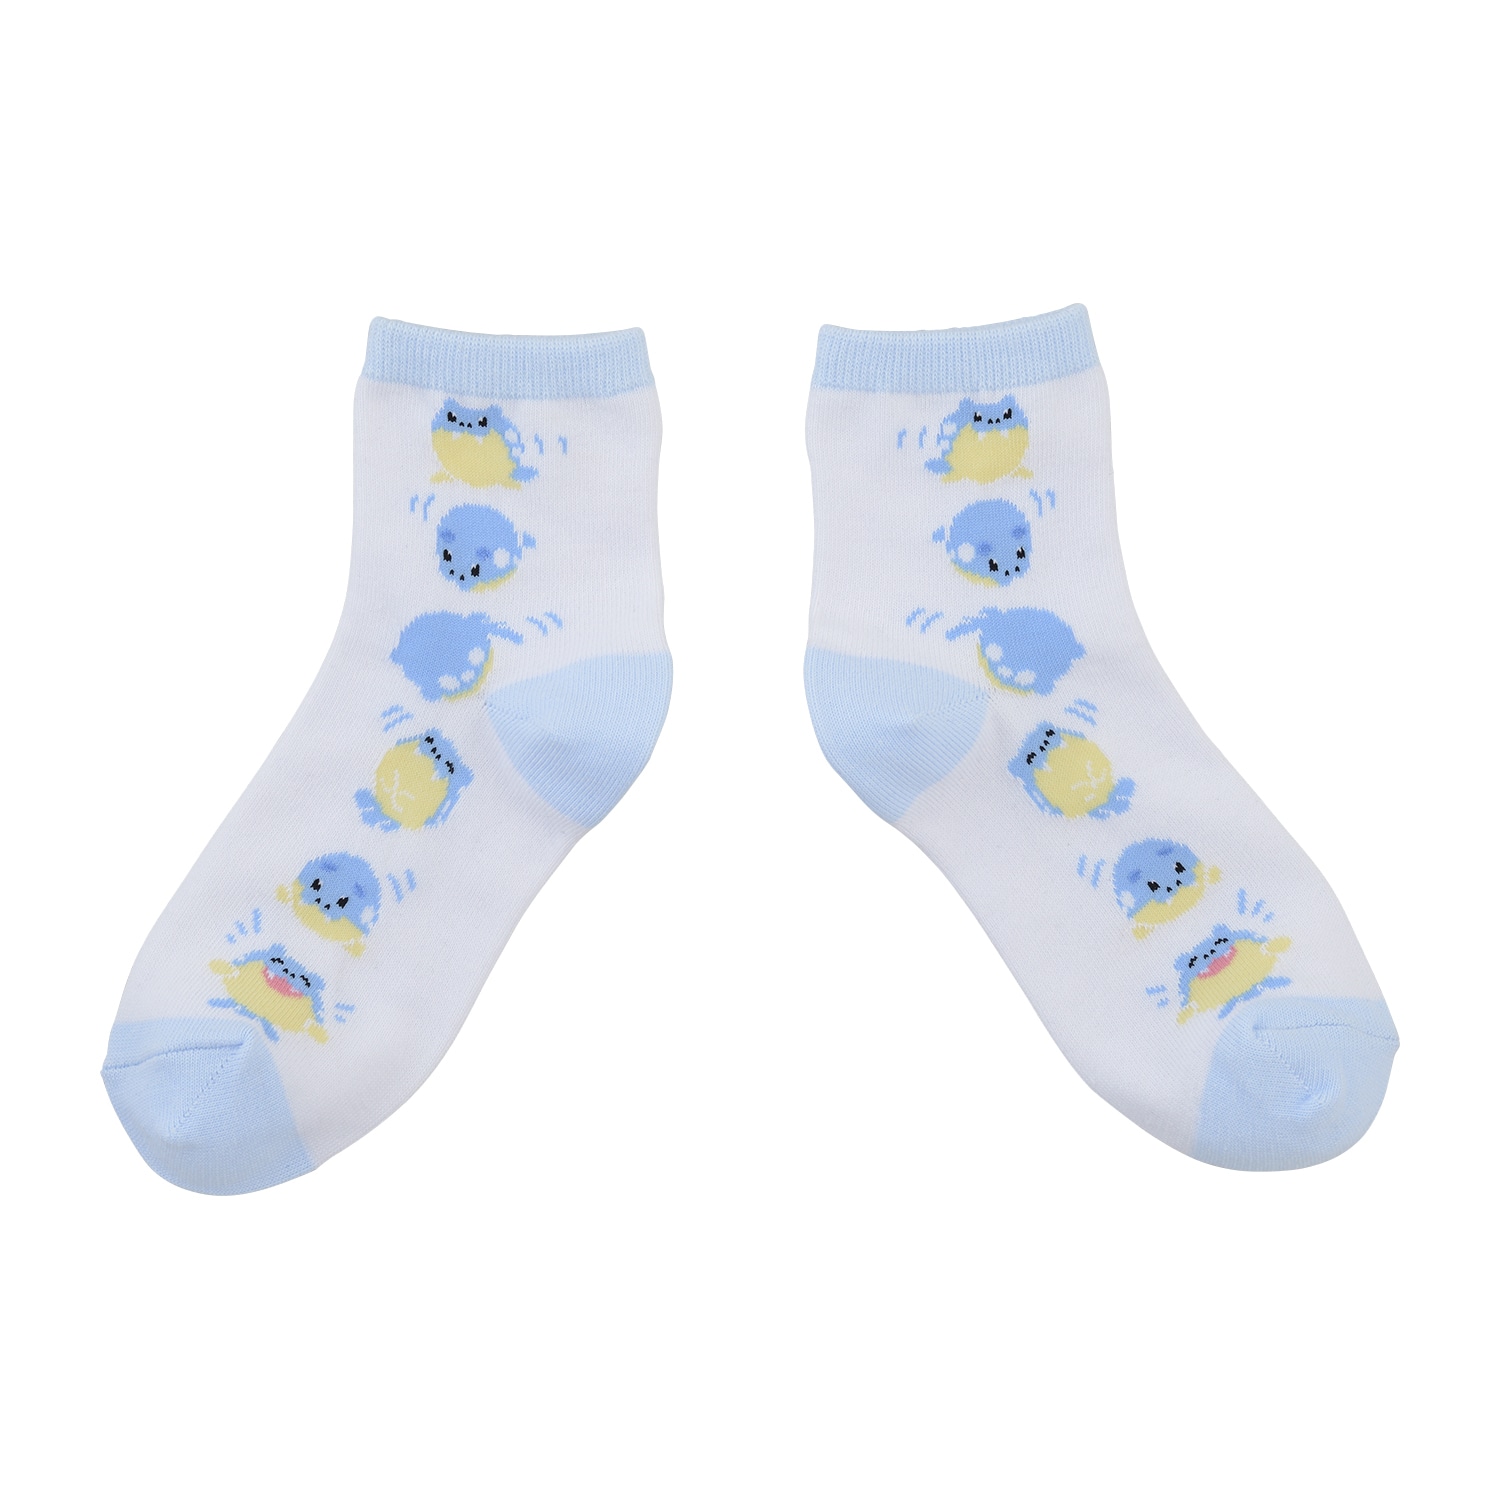 Middle Socks Spheal (23-25cm)